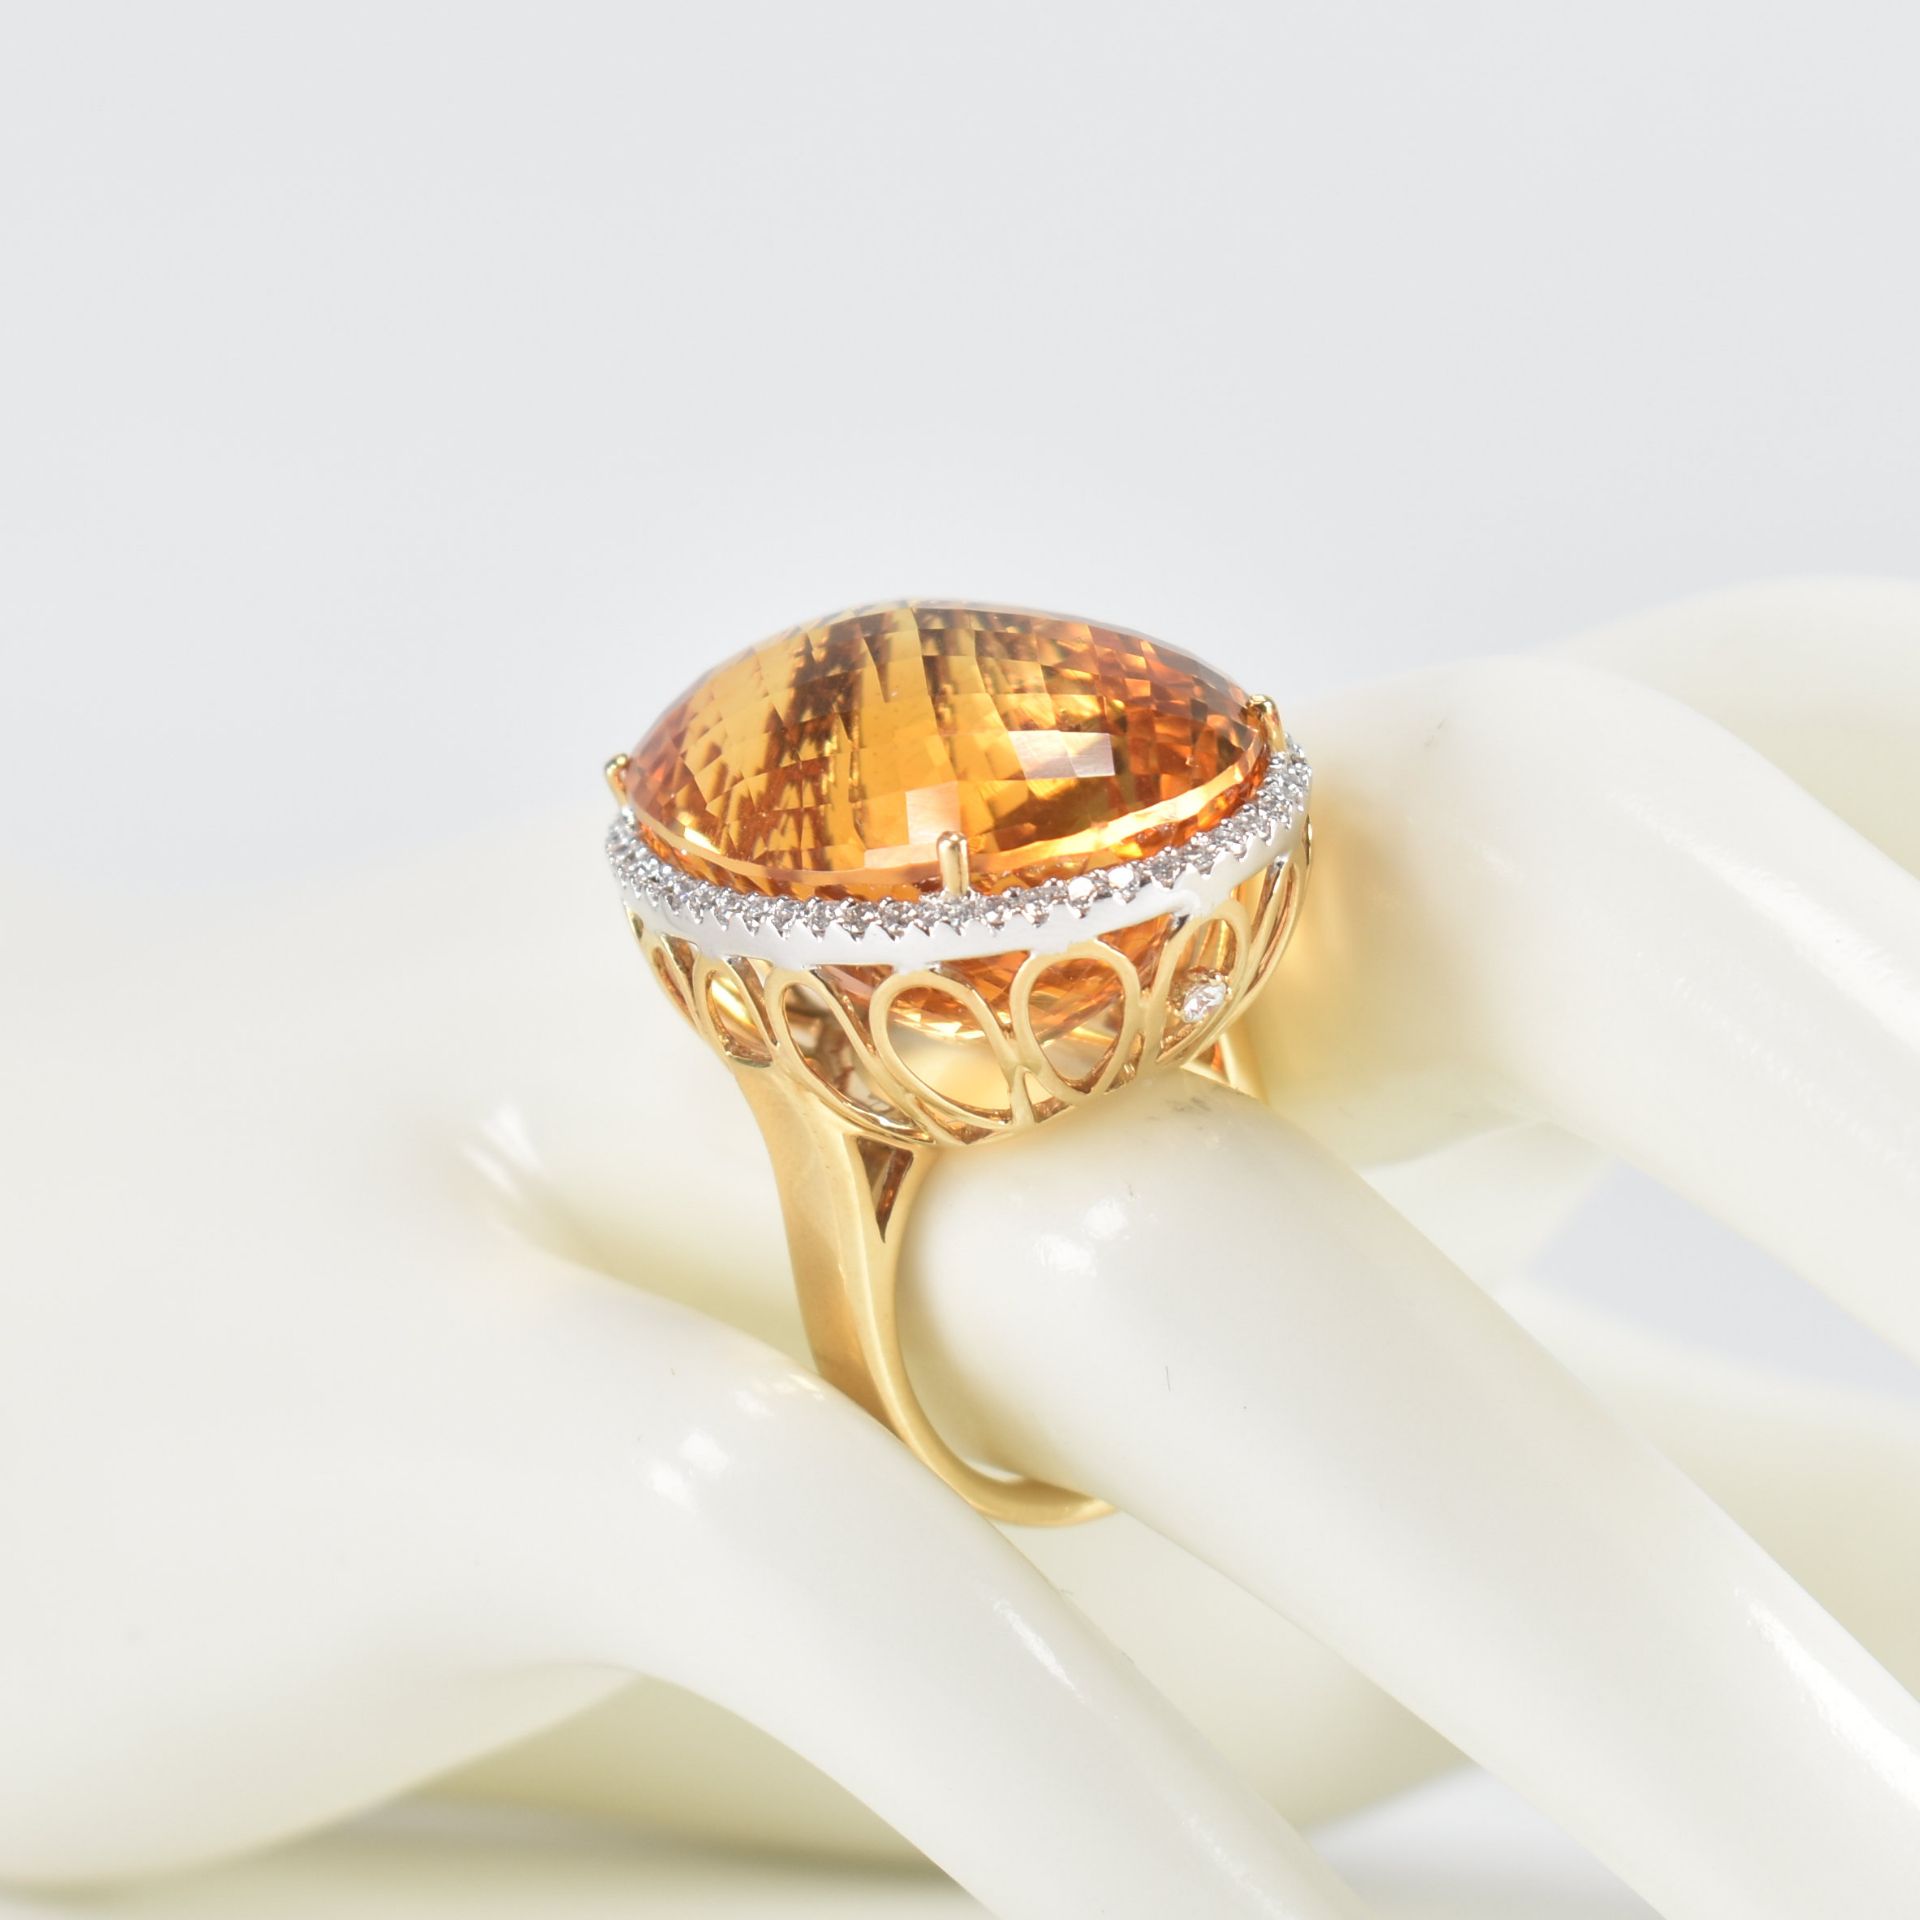 HALLMARKED 18CT GOLD CITRINE & DIAMOND COCKTAIL RING - Image 9 of 9